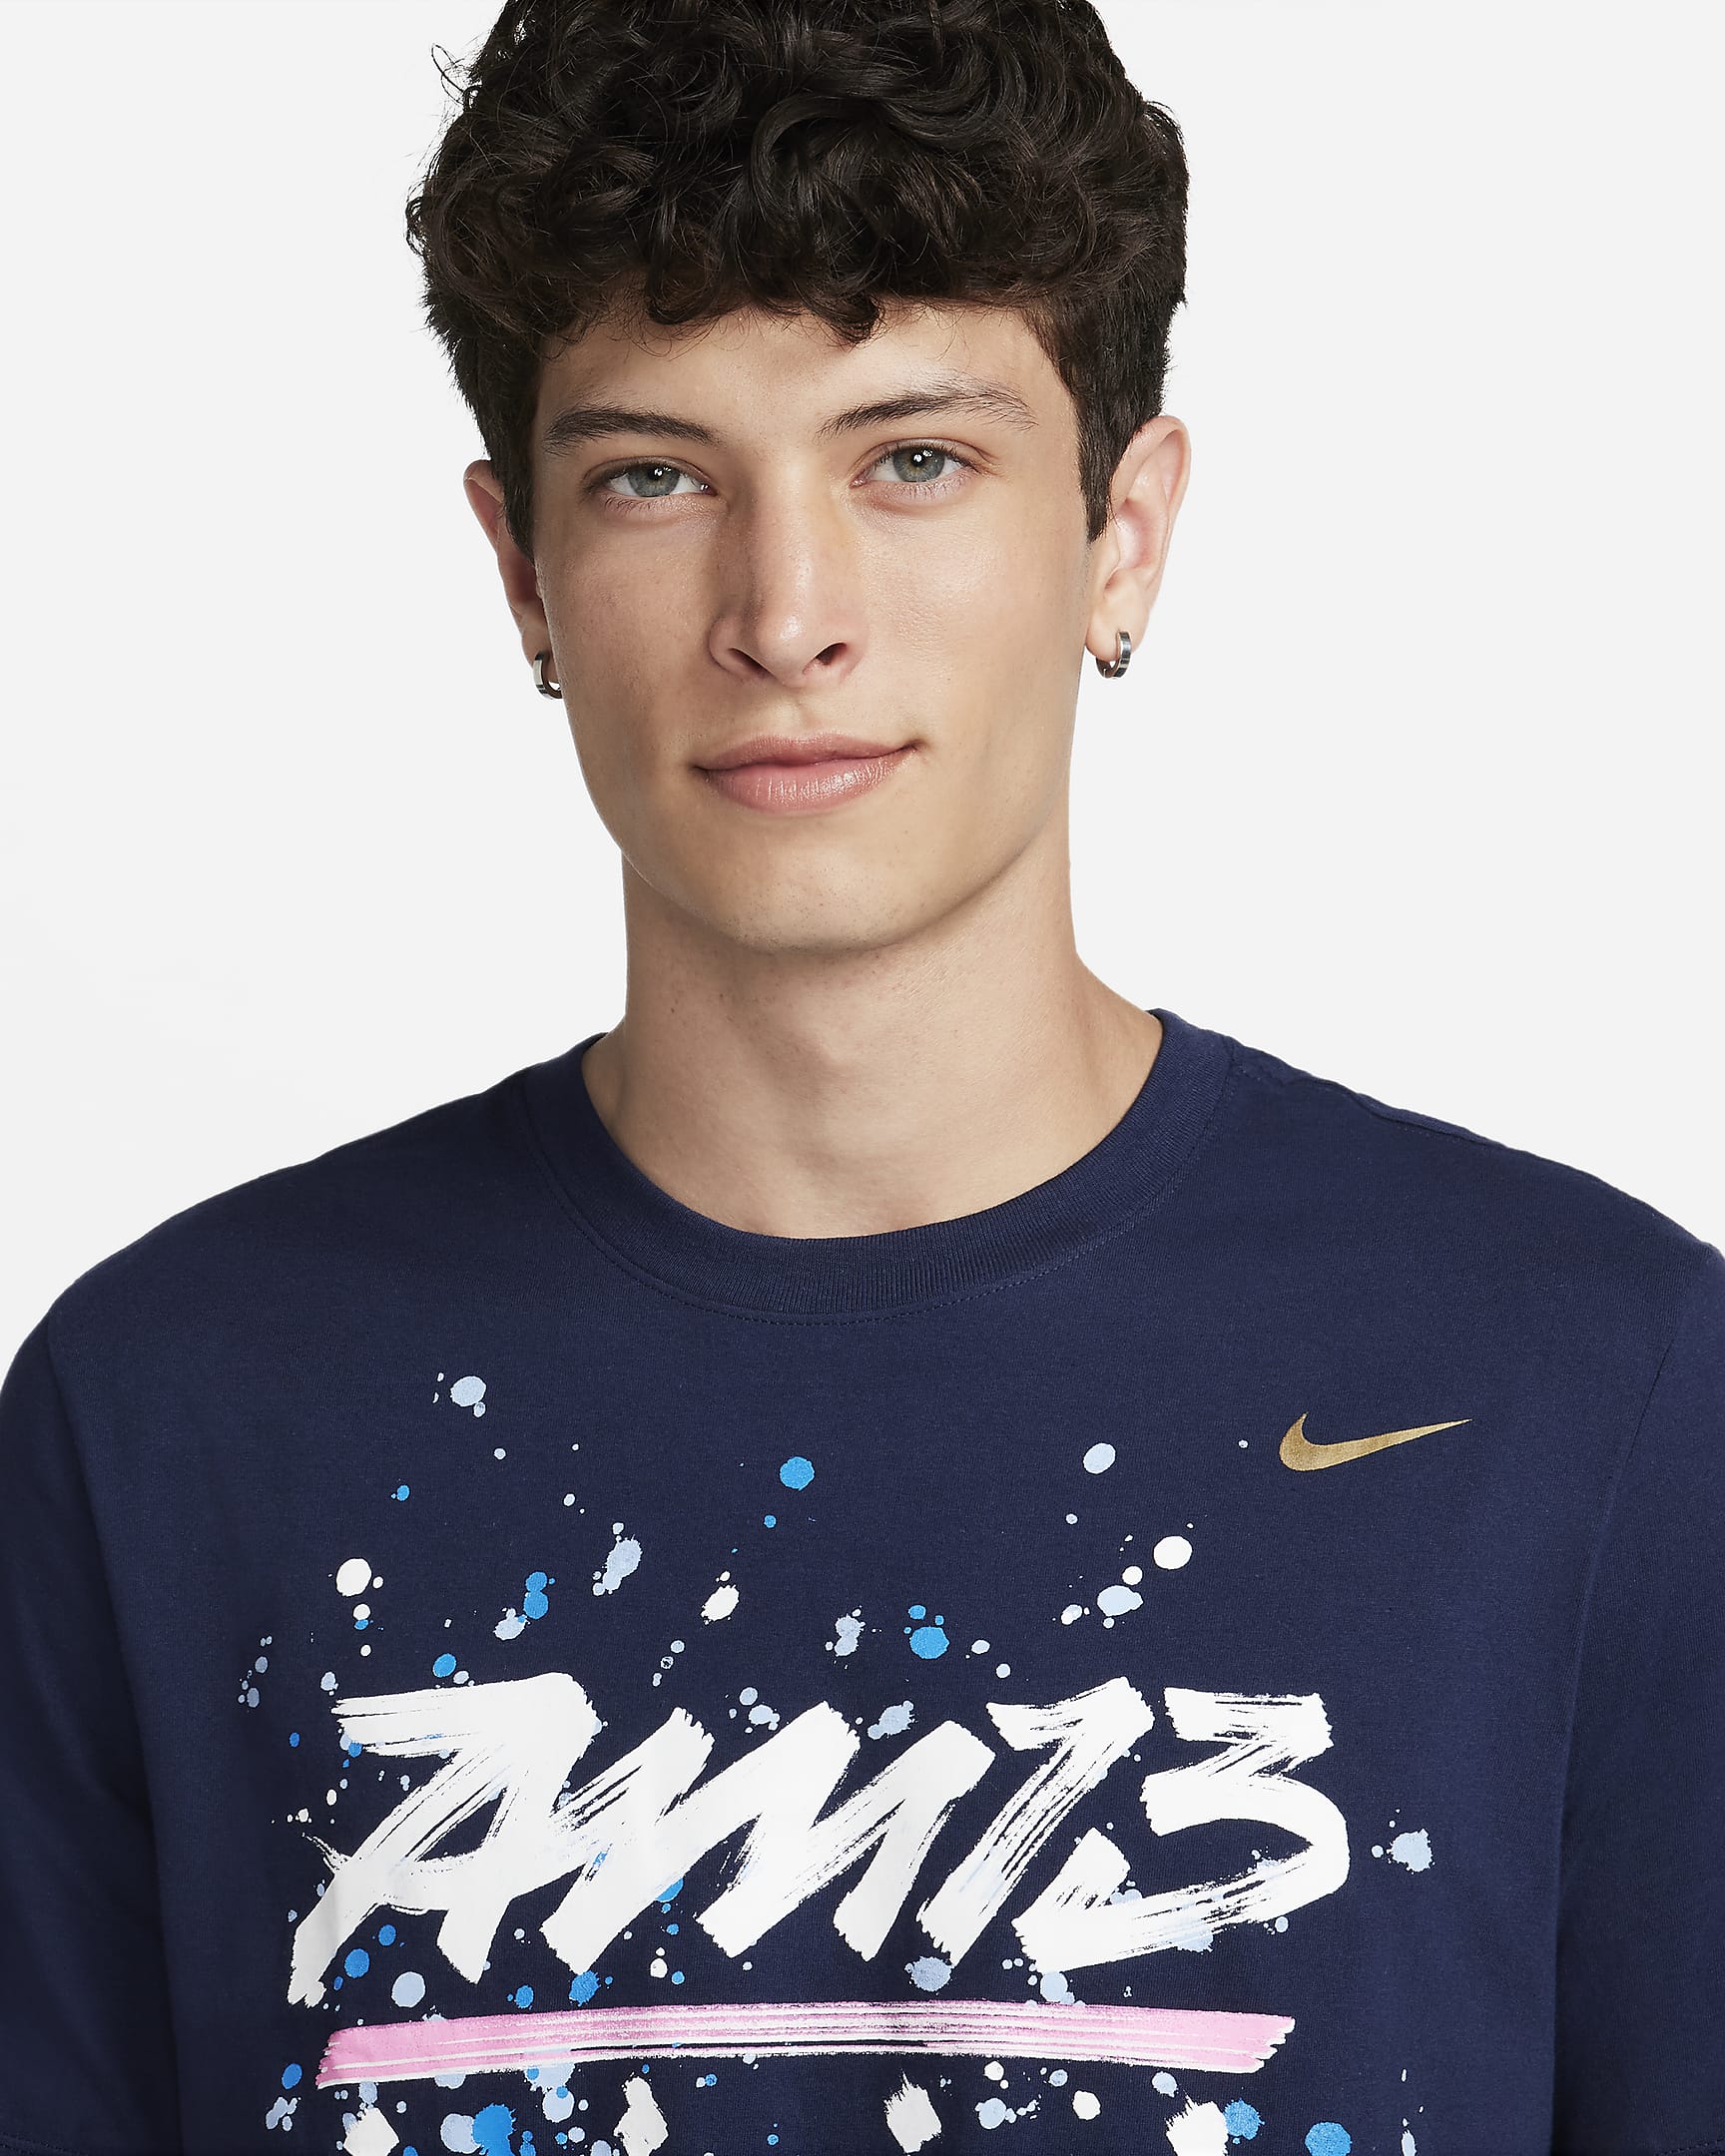 Alex Morgan Men's Nike Soccer T-Shirt. Nike.com